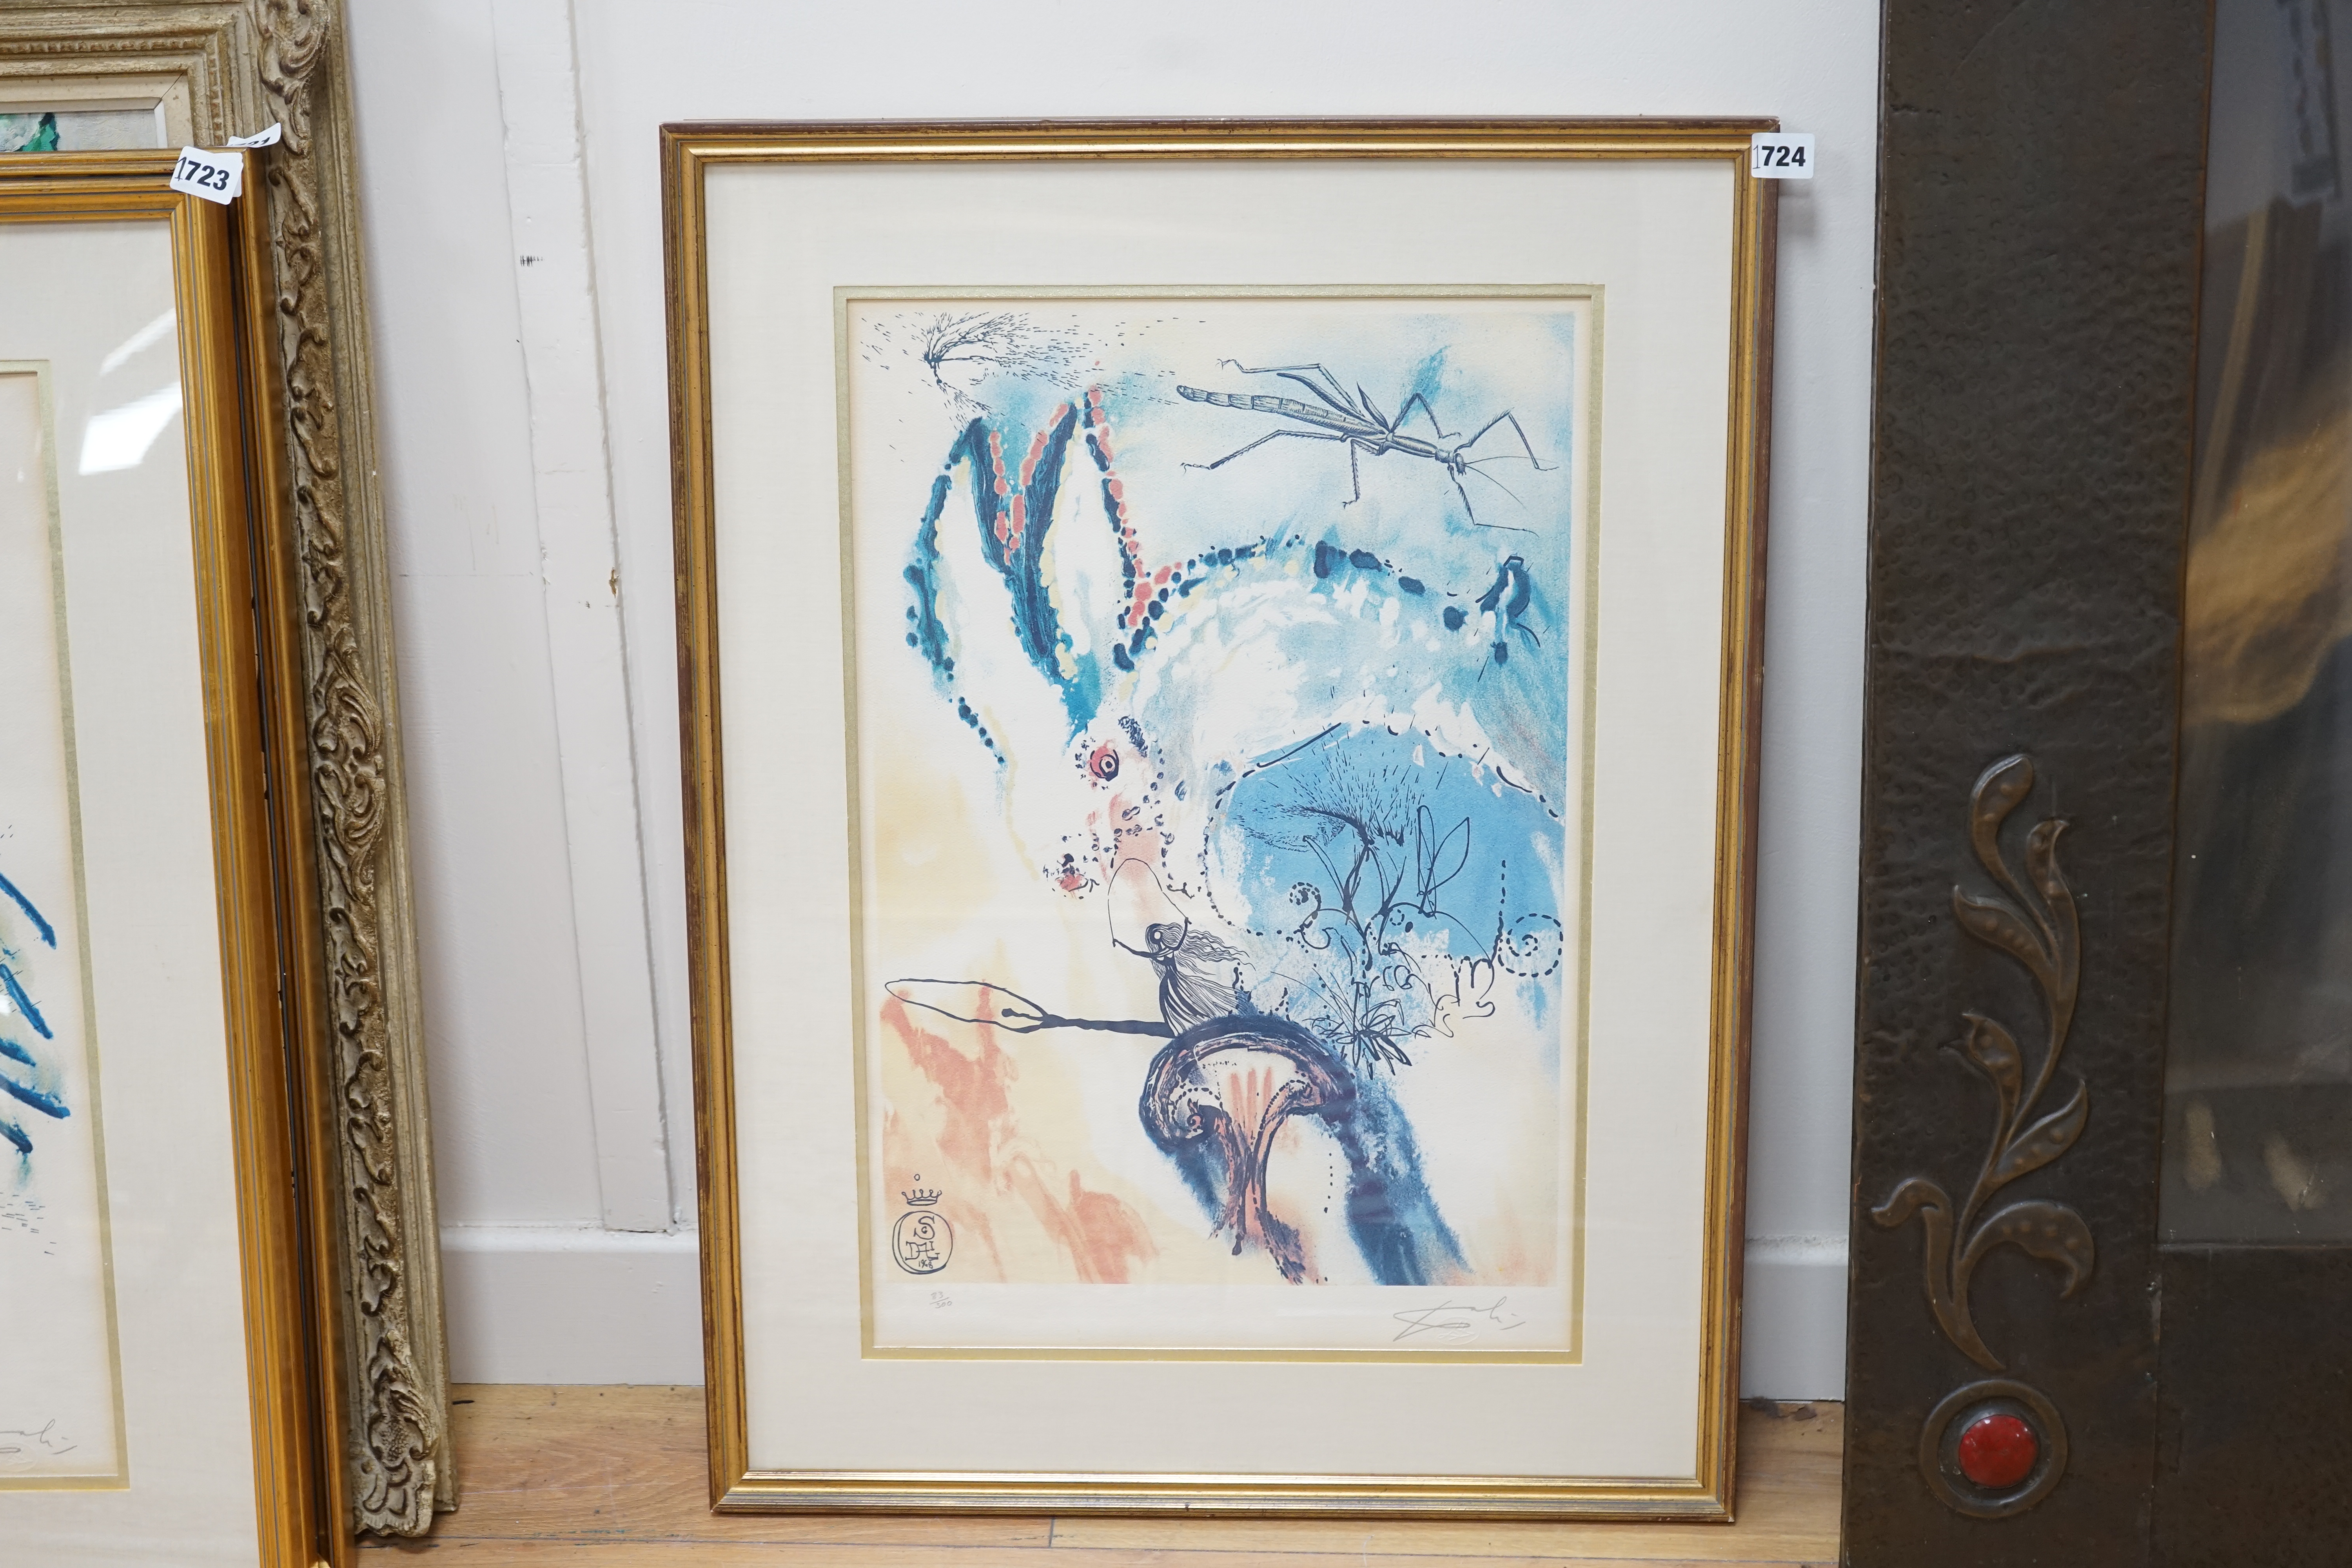 Salvador Dali (Spanish 1904-1989), colour lithograph, Alice in Wonderland, ‘Down the Rabbit Hole’, pencil numbered 83/300, facsimile signature, certificate of authenticity verso 56 x 37cm. Condition - fair